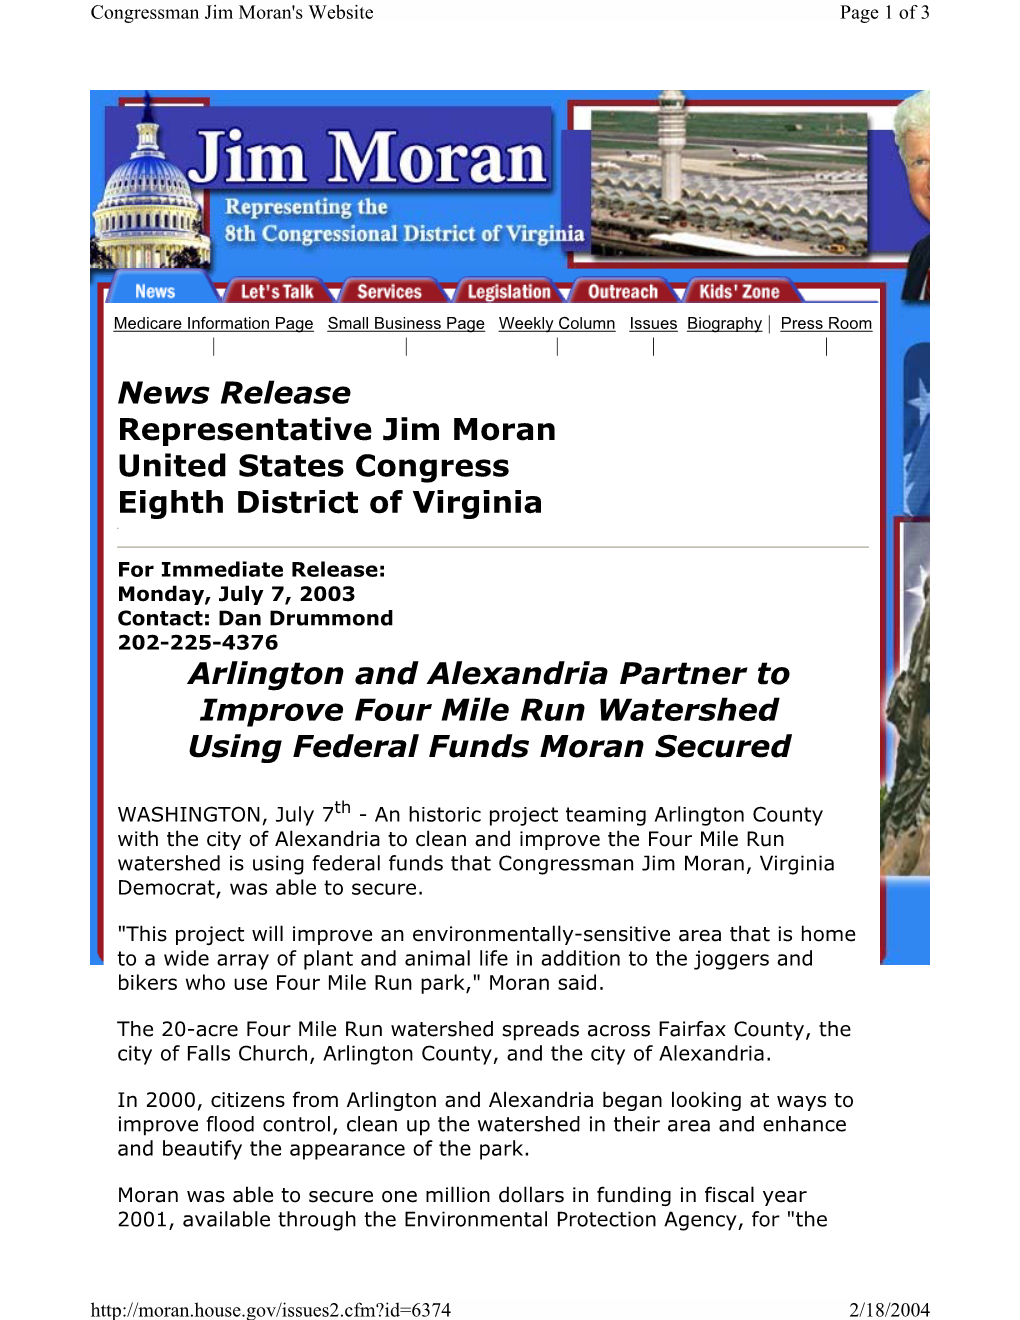 News Release Representative Jim Moran United States Congress Eighth District of Virginia